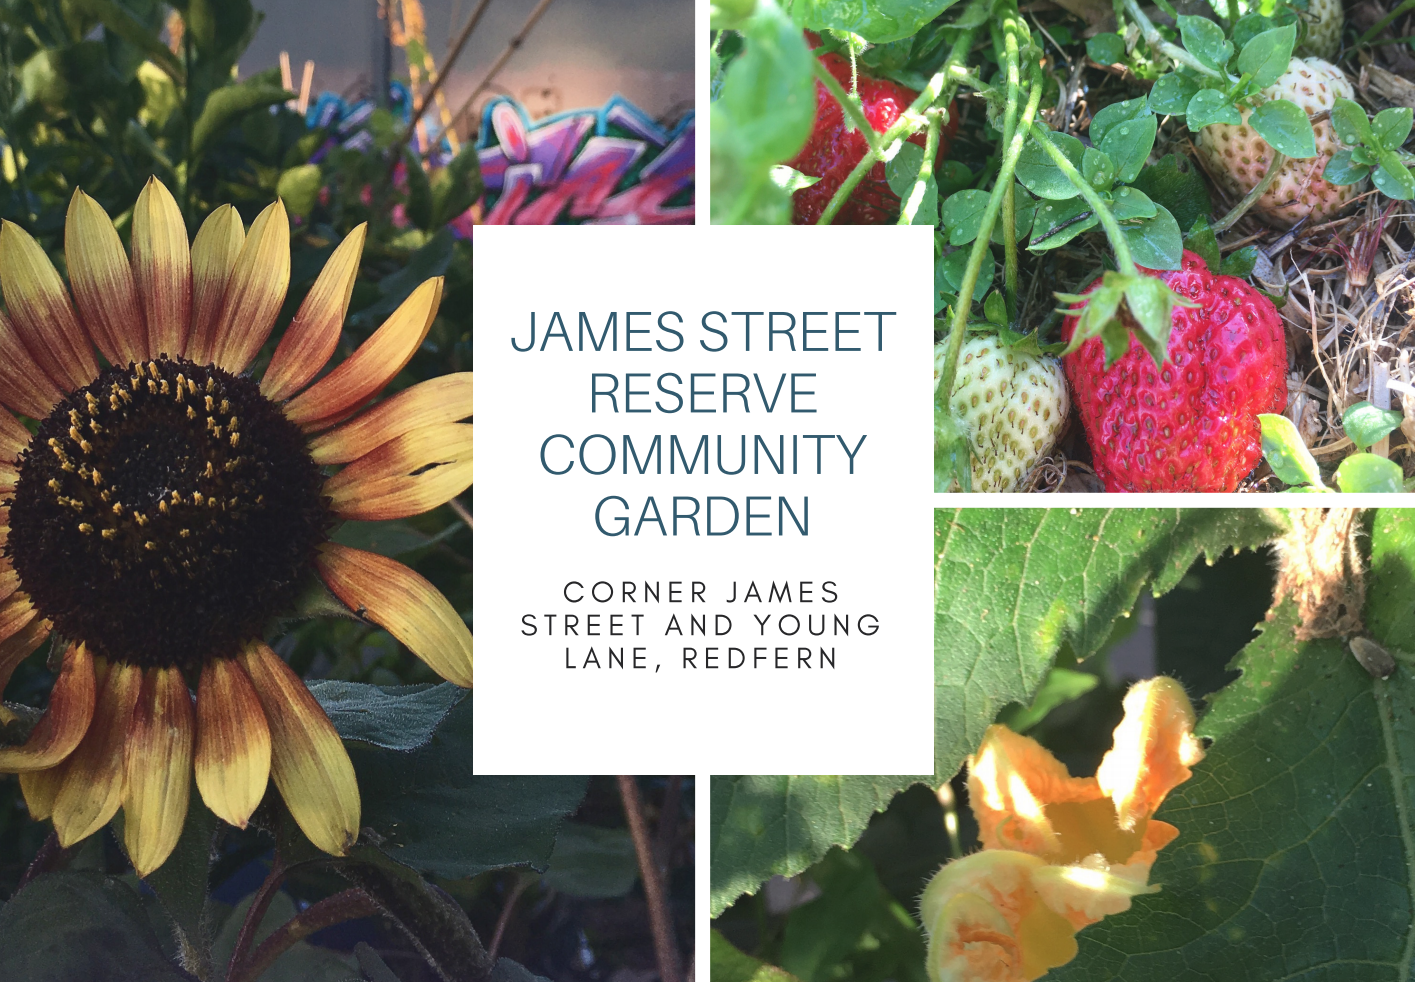 James Street Reserve Community Garden